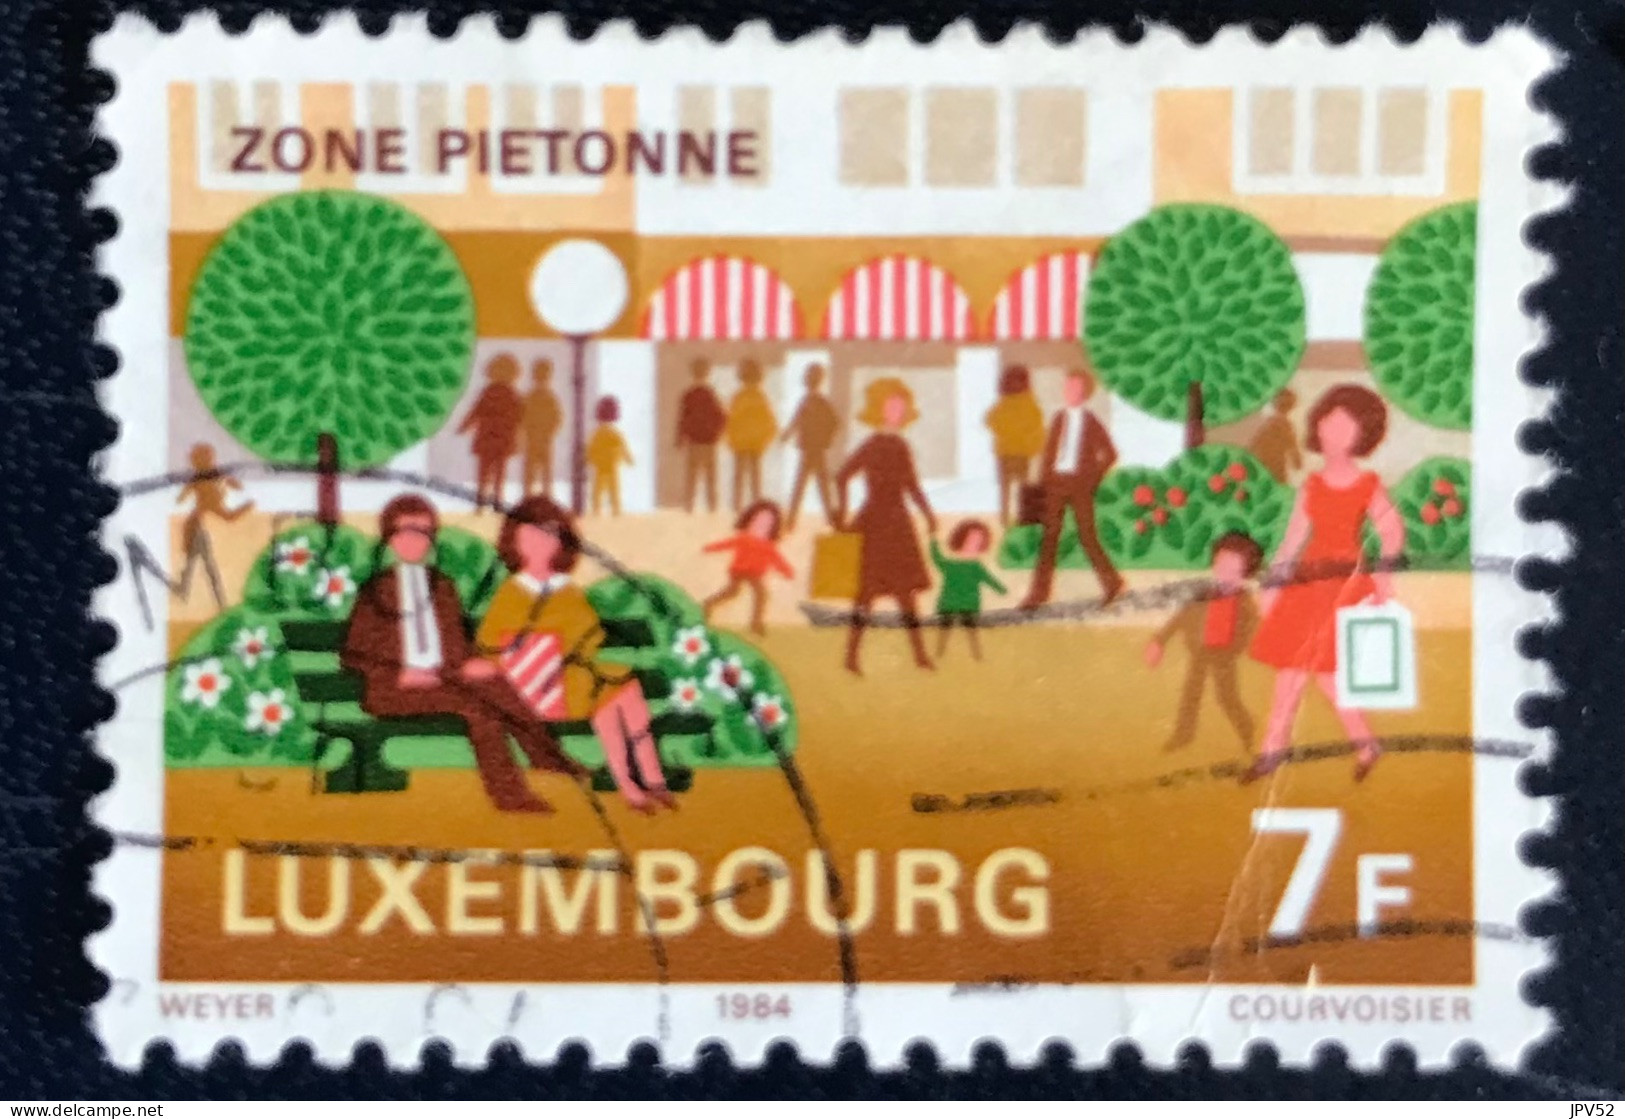 Luxembourg - Luxemburg - C18/34 - 1984 - (°)used - Michel 1095 - Milieubescherming - Usati